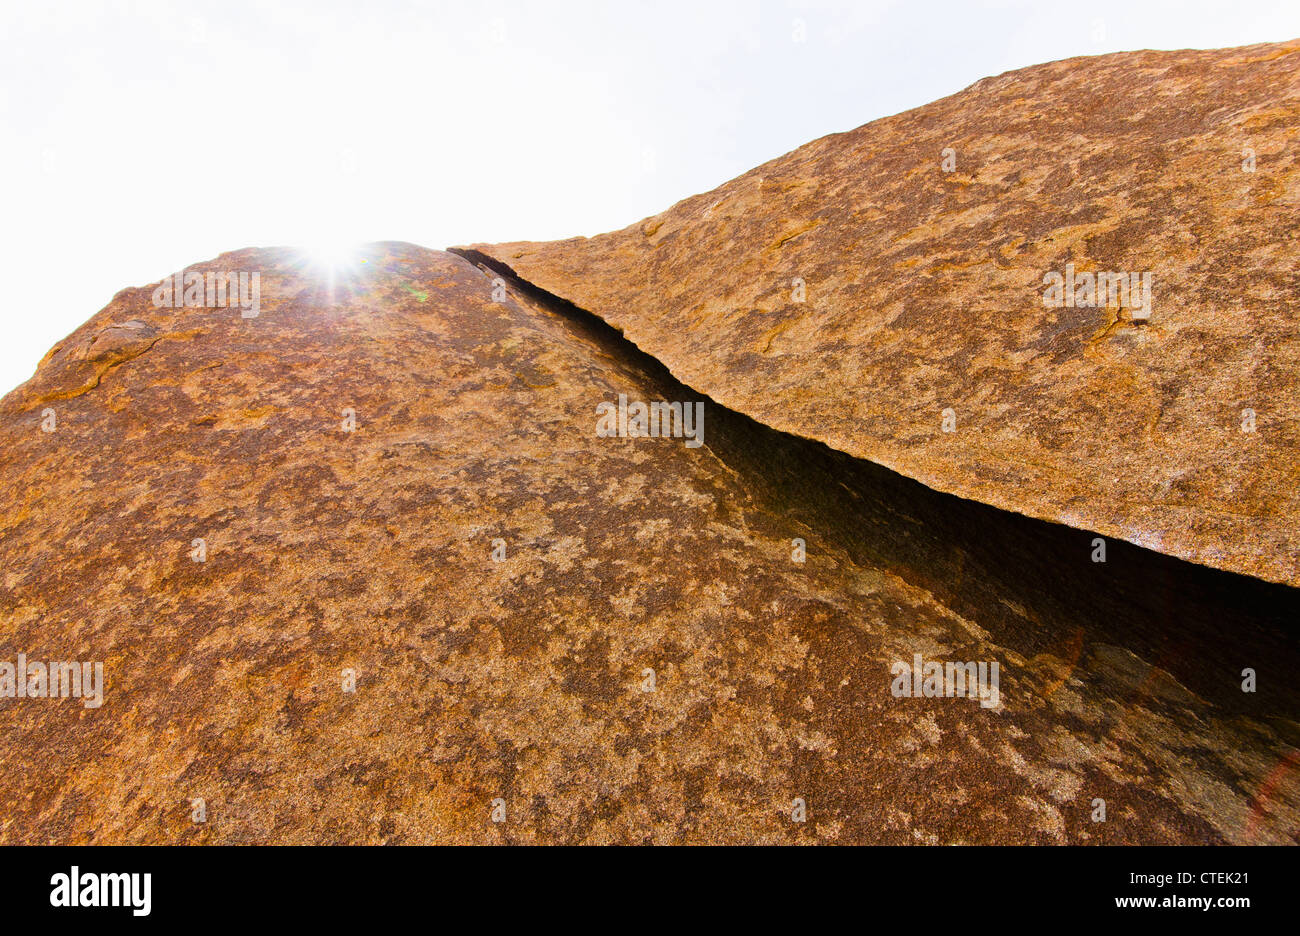 USA, California, Joshua Tree National Park, Sunlit rocks Stock Photo